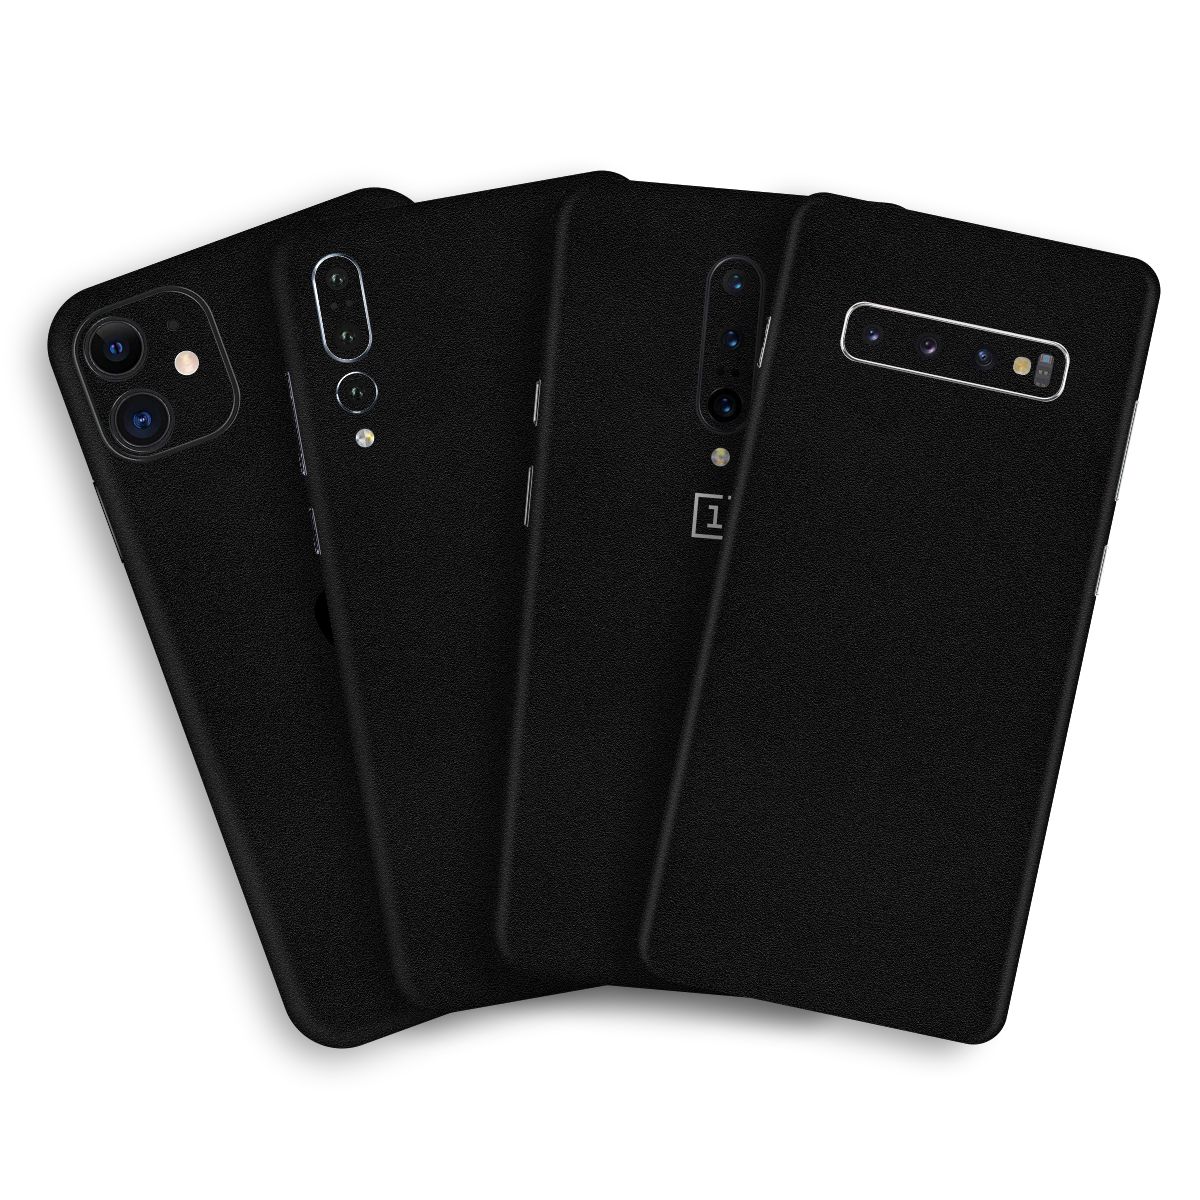 Matte Black Mobile Skin / Mobile Wrap for Motorola Moto G4 Play